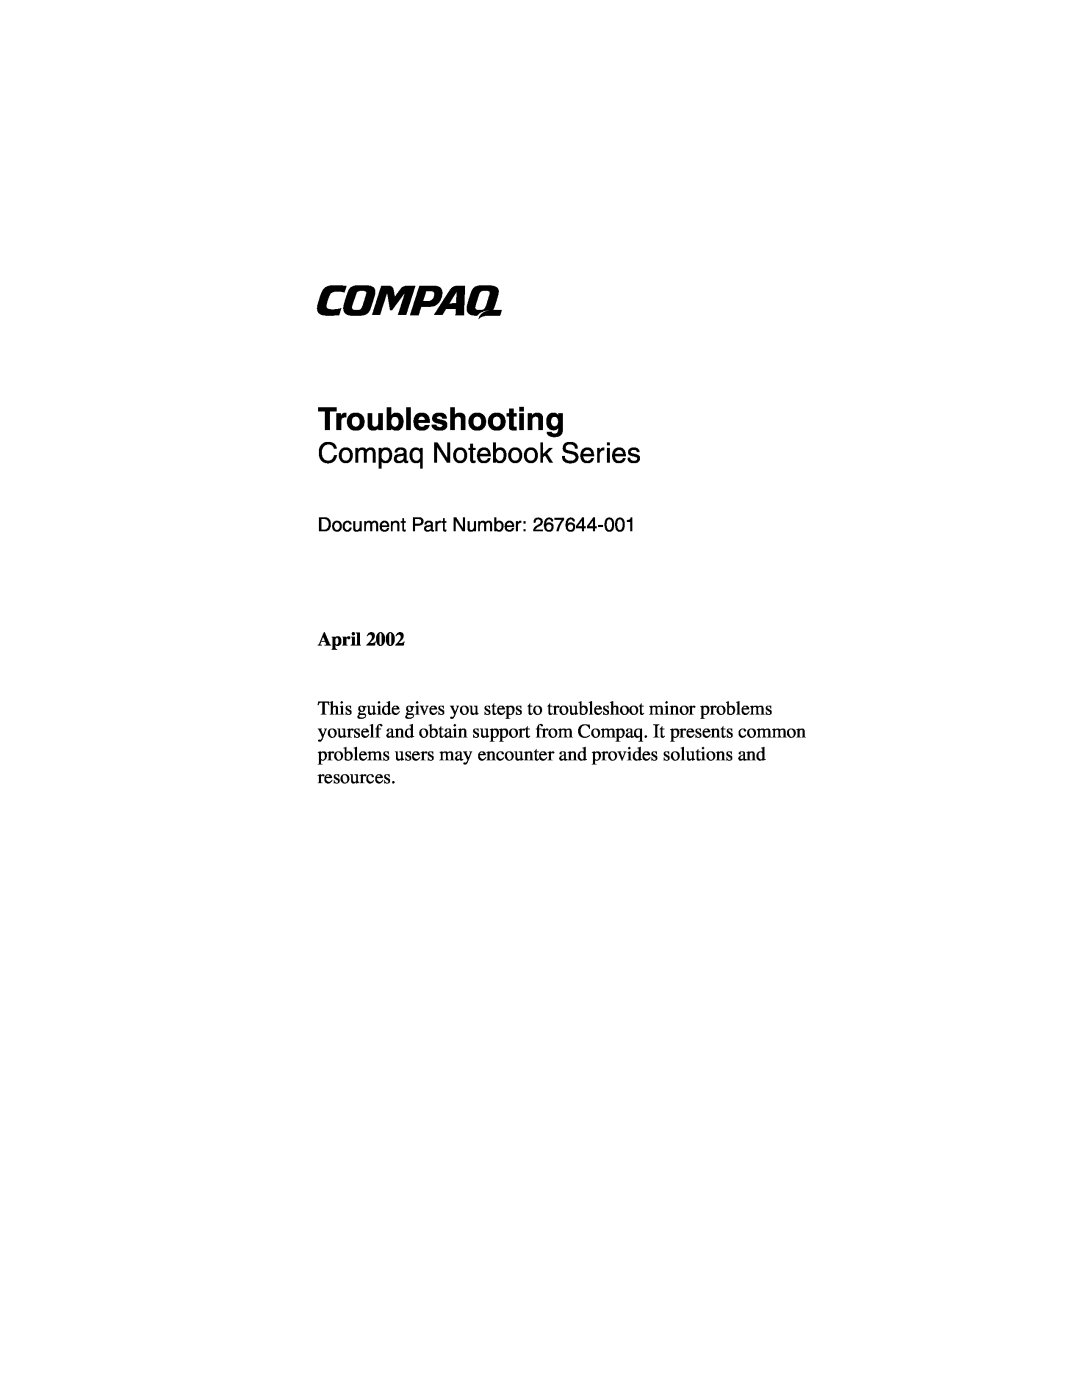 DeWalt 267644-001 manual Troubleshooting, Compaq Notebook Series, Document Part Number, April 